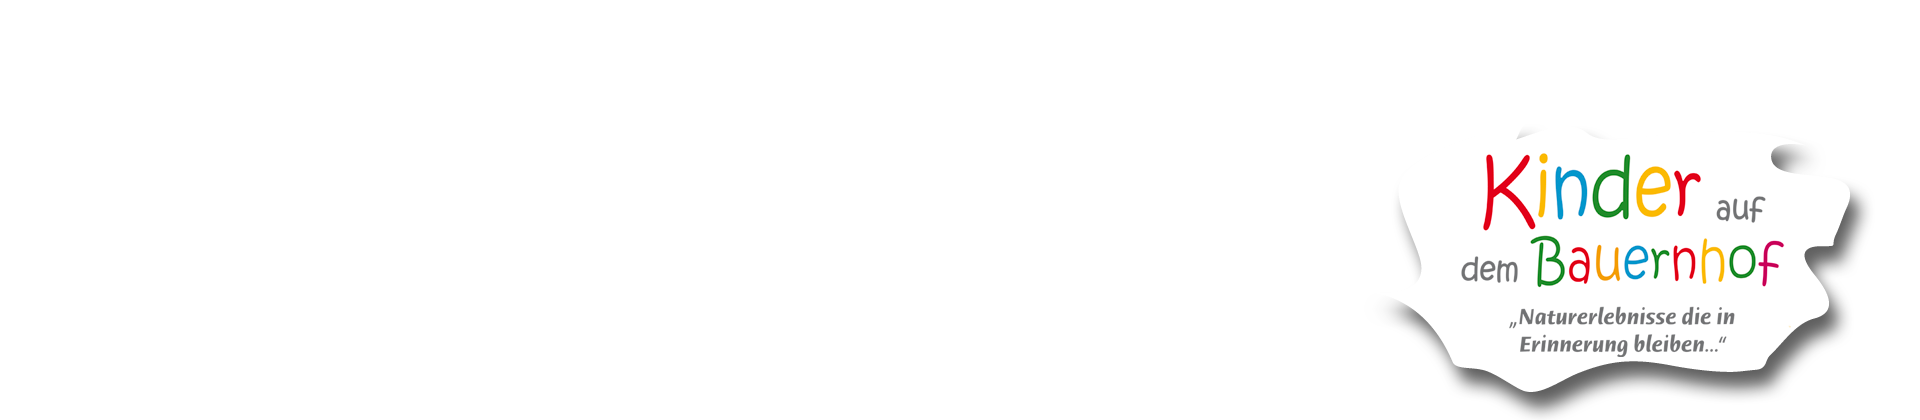 brandfeldhof-logo-2020-kinder-r2.png